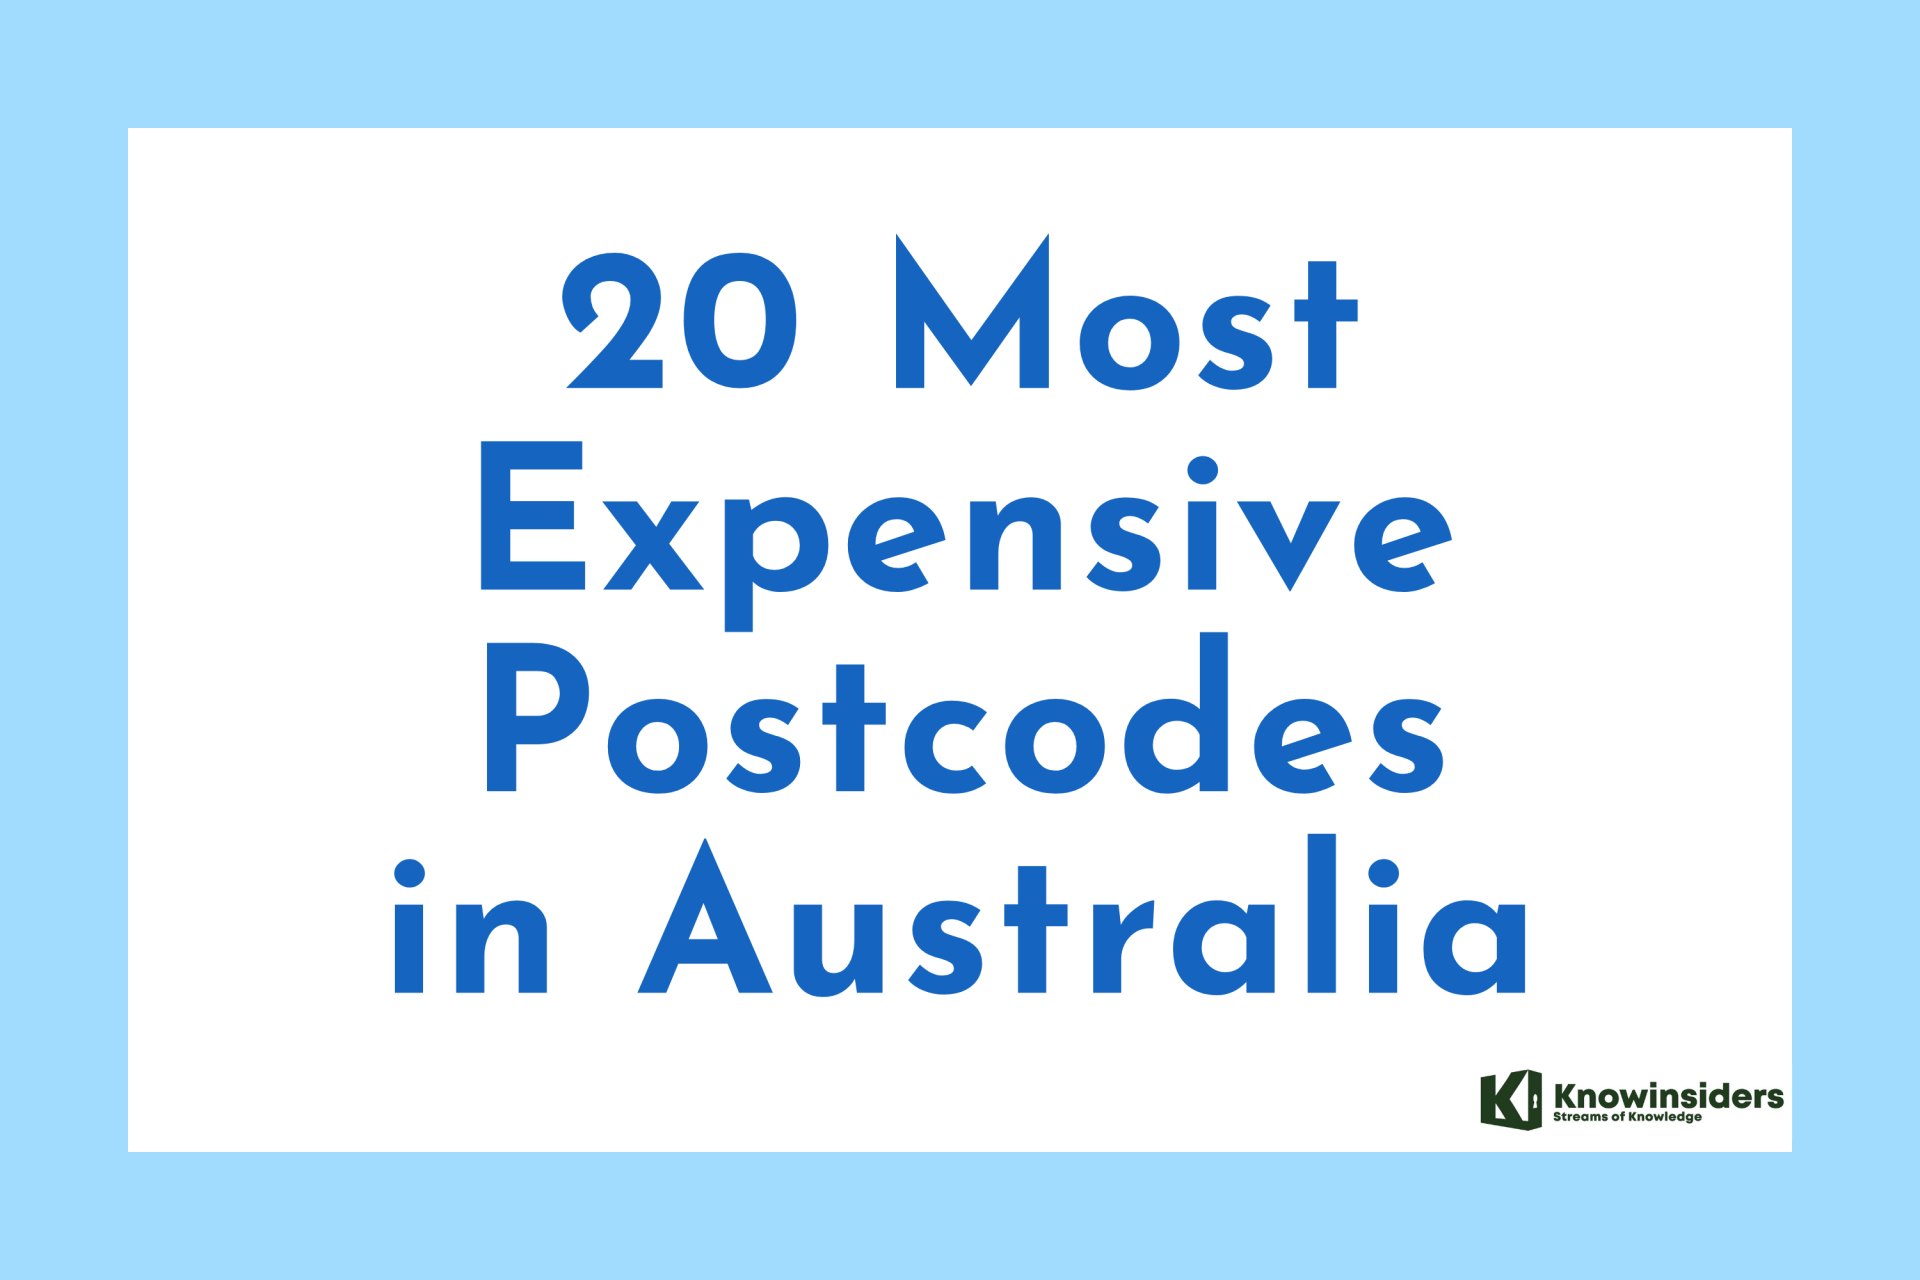 20 Most Expensive Postcodes in Australia - Sydney Surpasses Melbourne